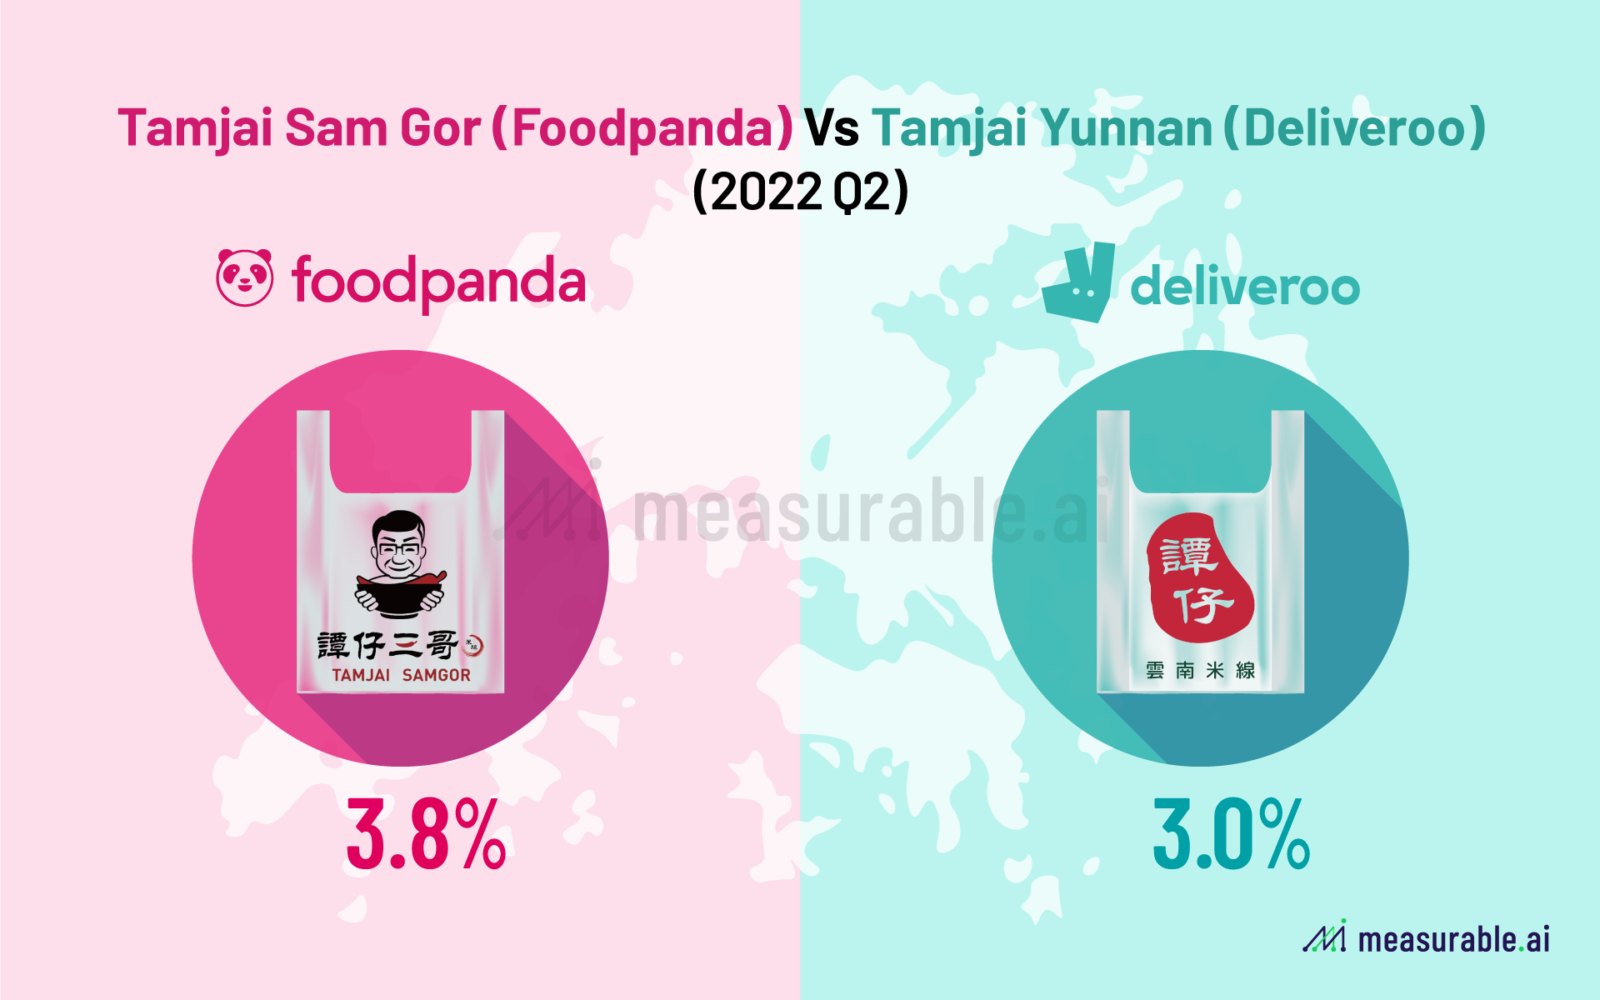 Tamjai Sam Gor(Foodpanda) versus Tamjai Yunnan(Deliveroo)